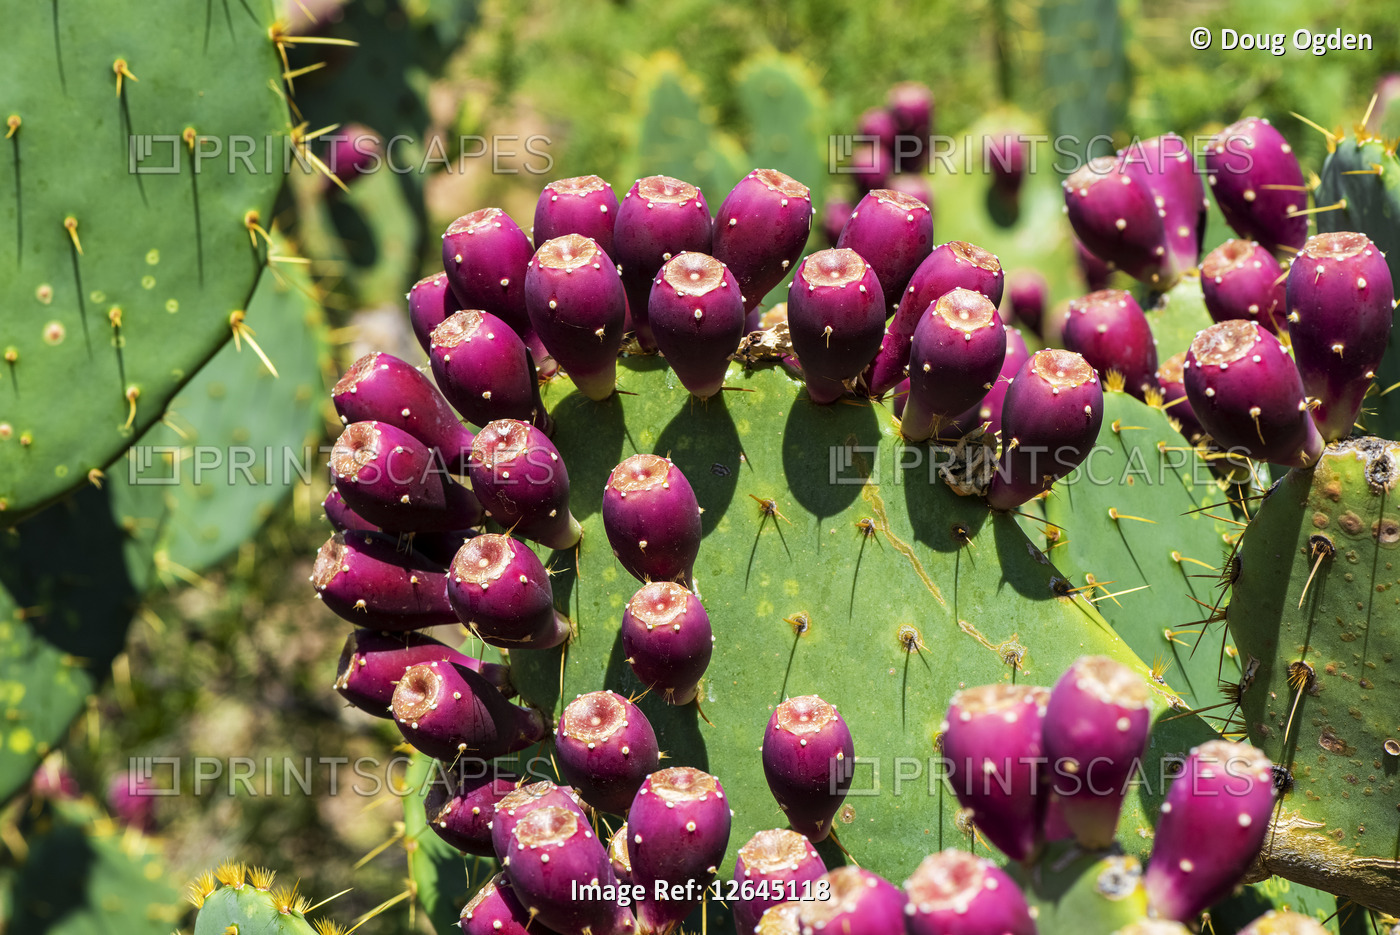 Fruit of the Prickly Pear Cactus (Opuntia); Arizona, United States of America